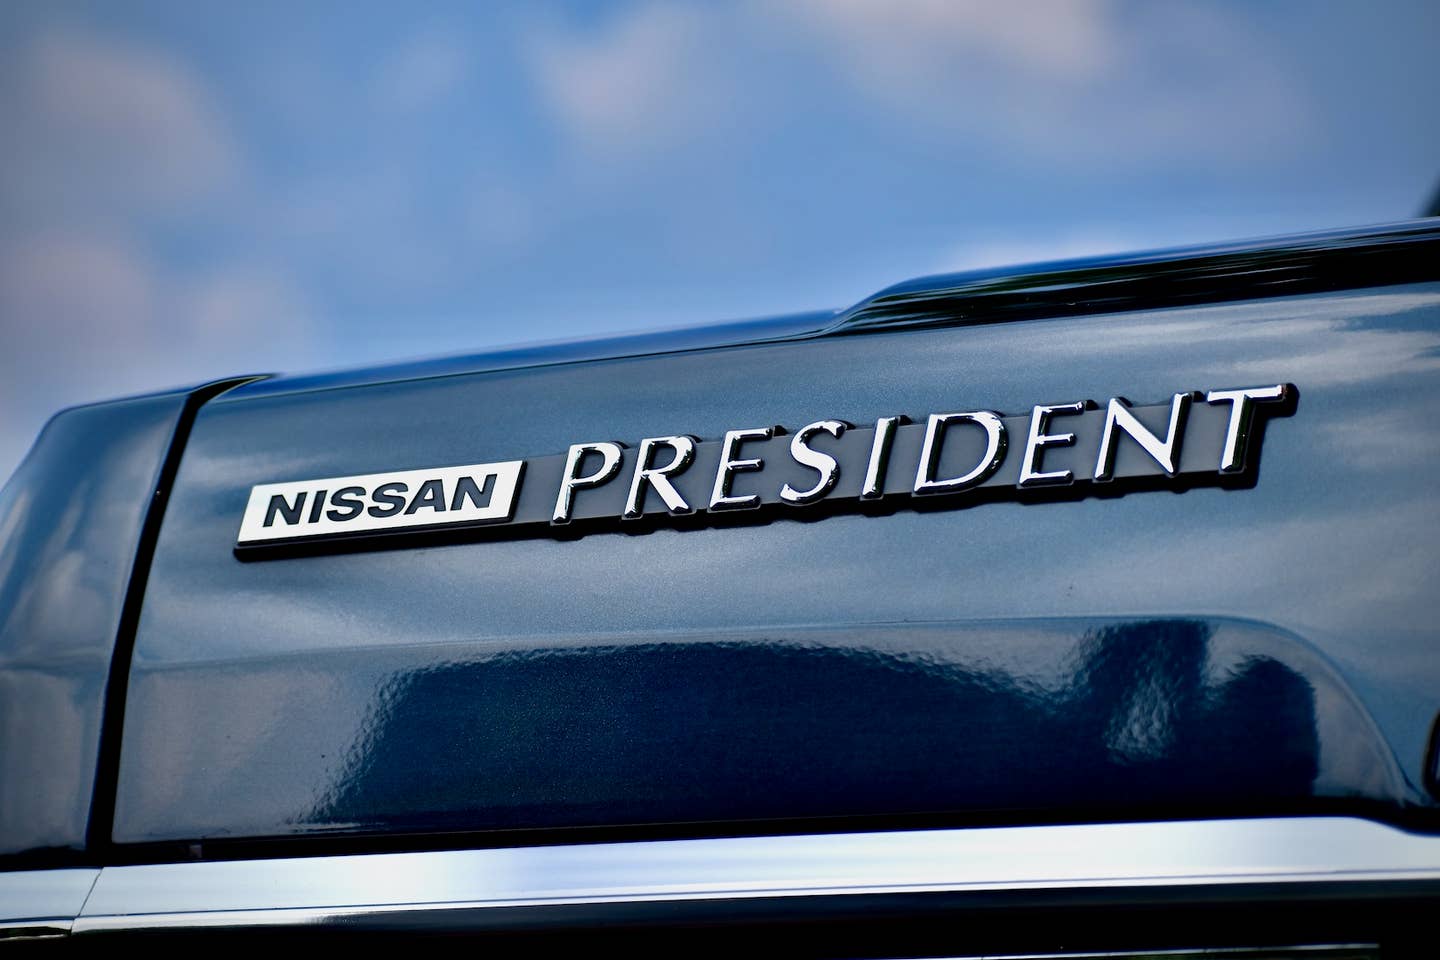 1989 Nissan President trunk lid badge